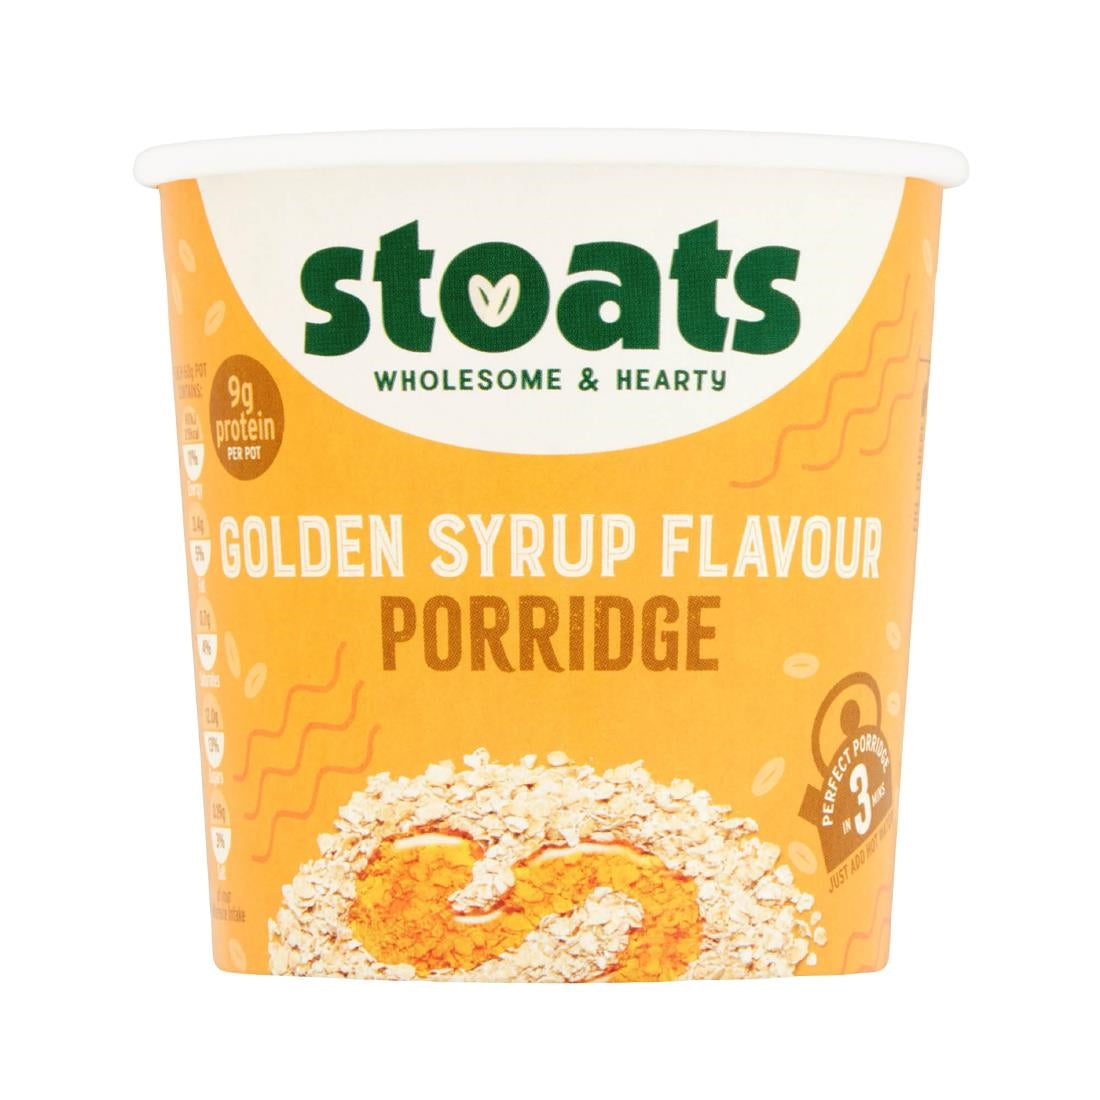 HS852 Stoats Golden Syrup Porridge Pots 60g (Pack of 16)